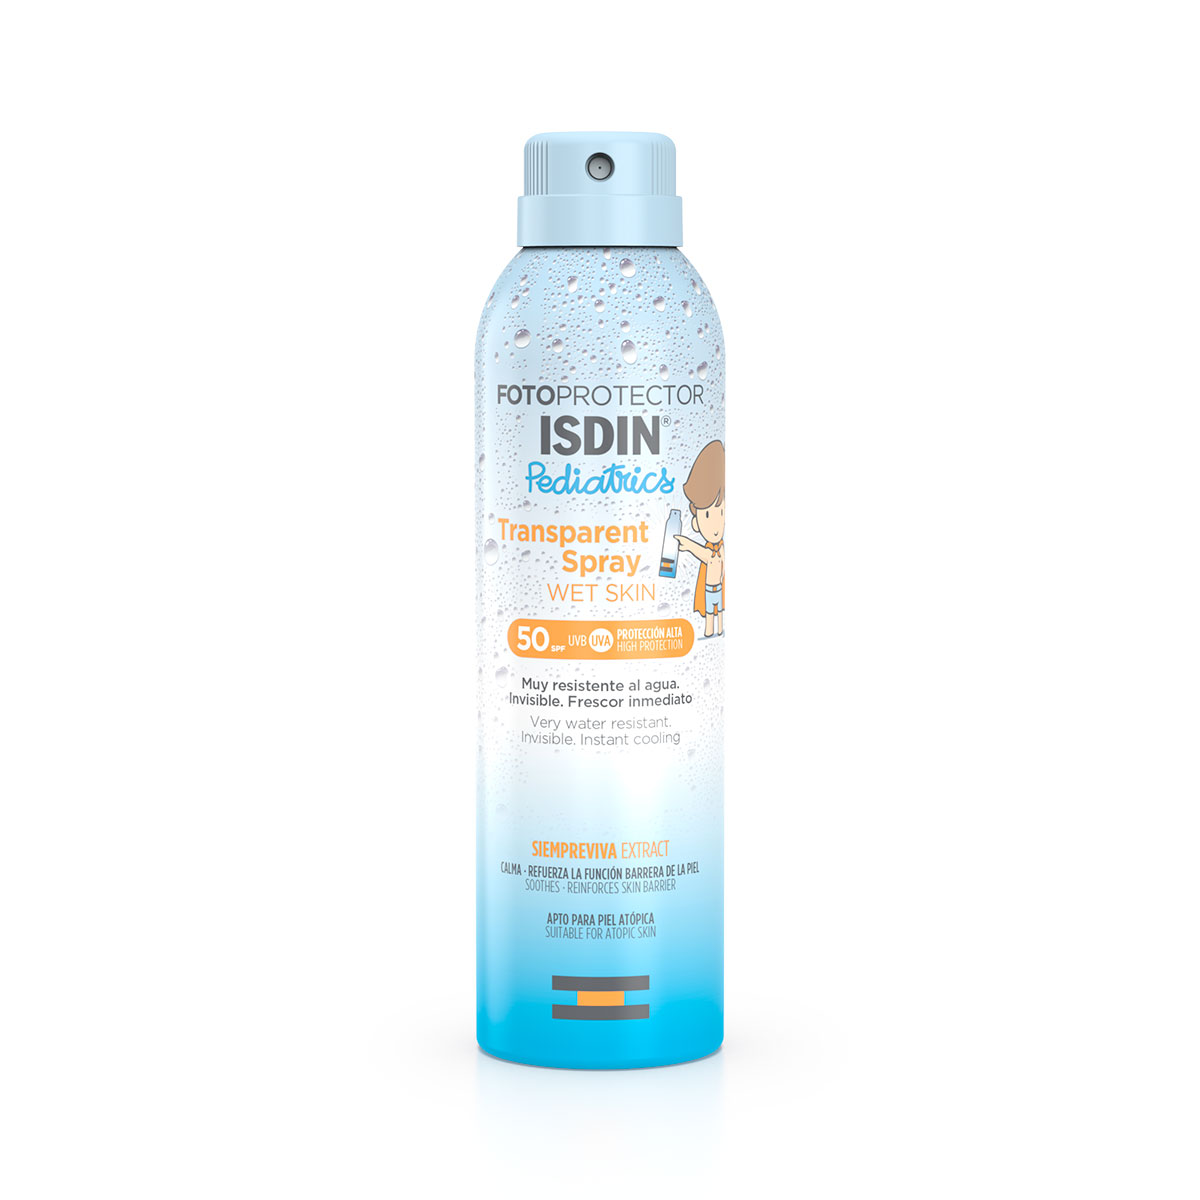 Isdin Fotoprotector Pediatrics Transparent Spray Wet Skin SPF50